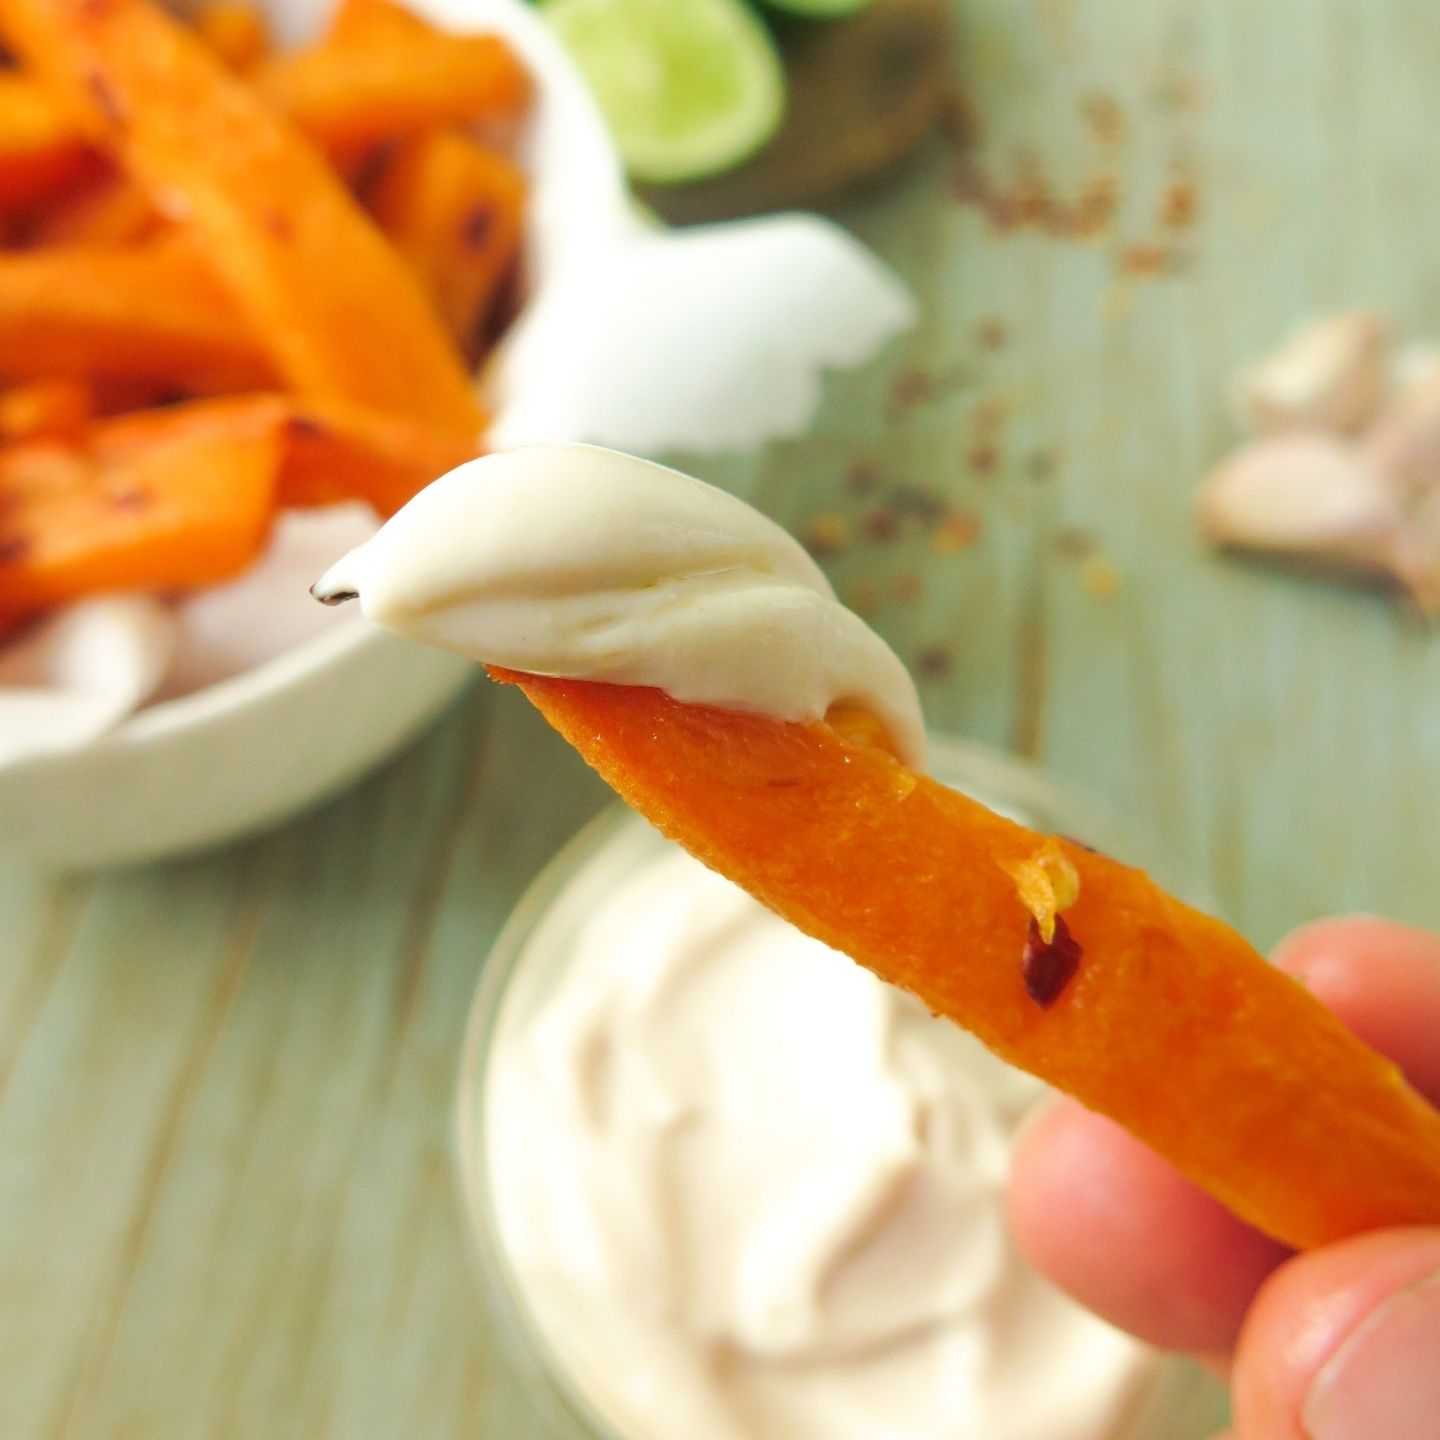 Vegan garlic aioli Close Up on sweet potato chips